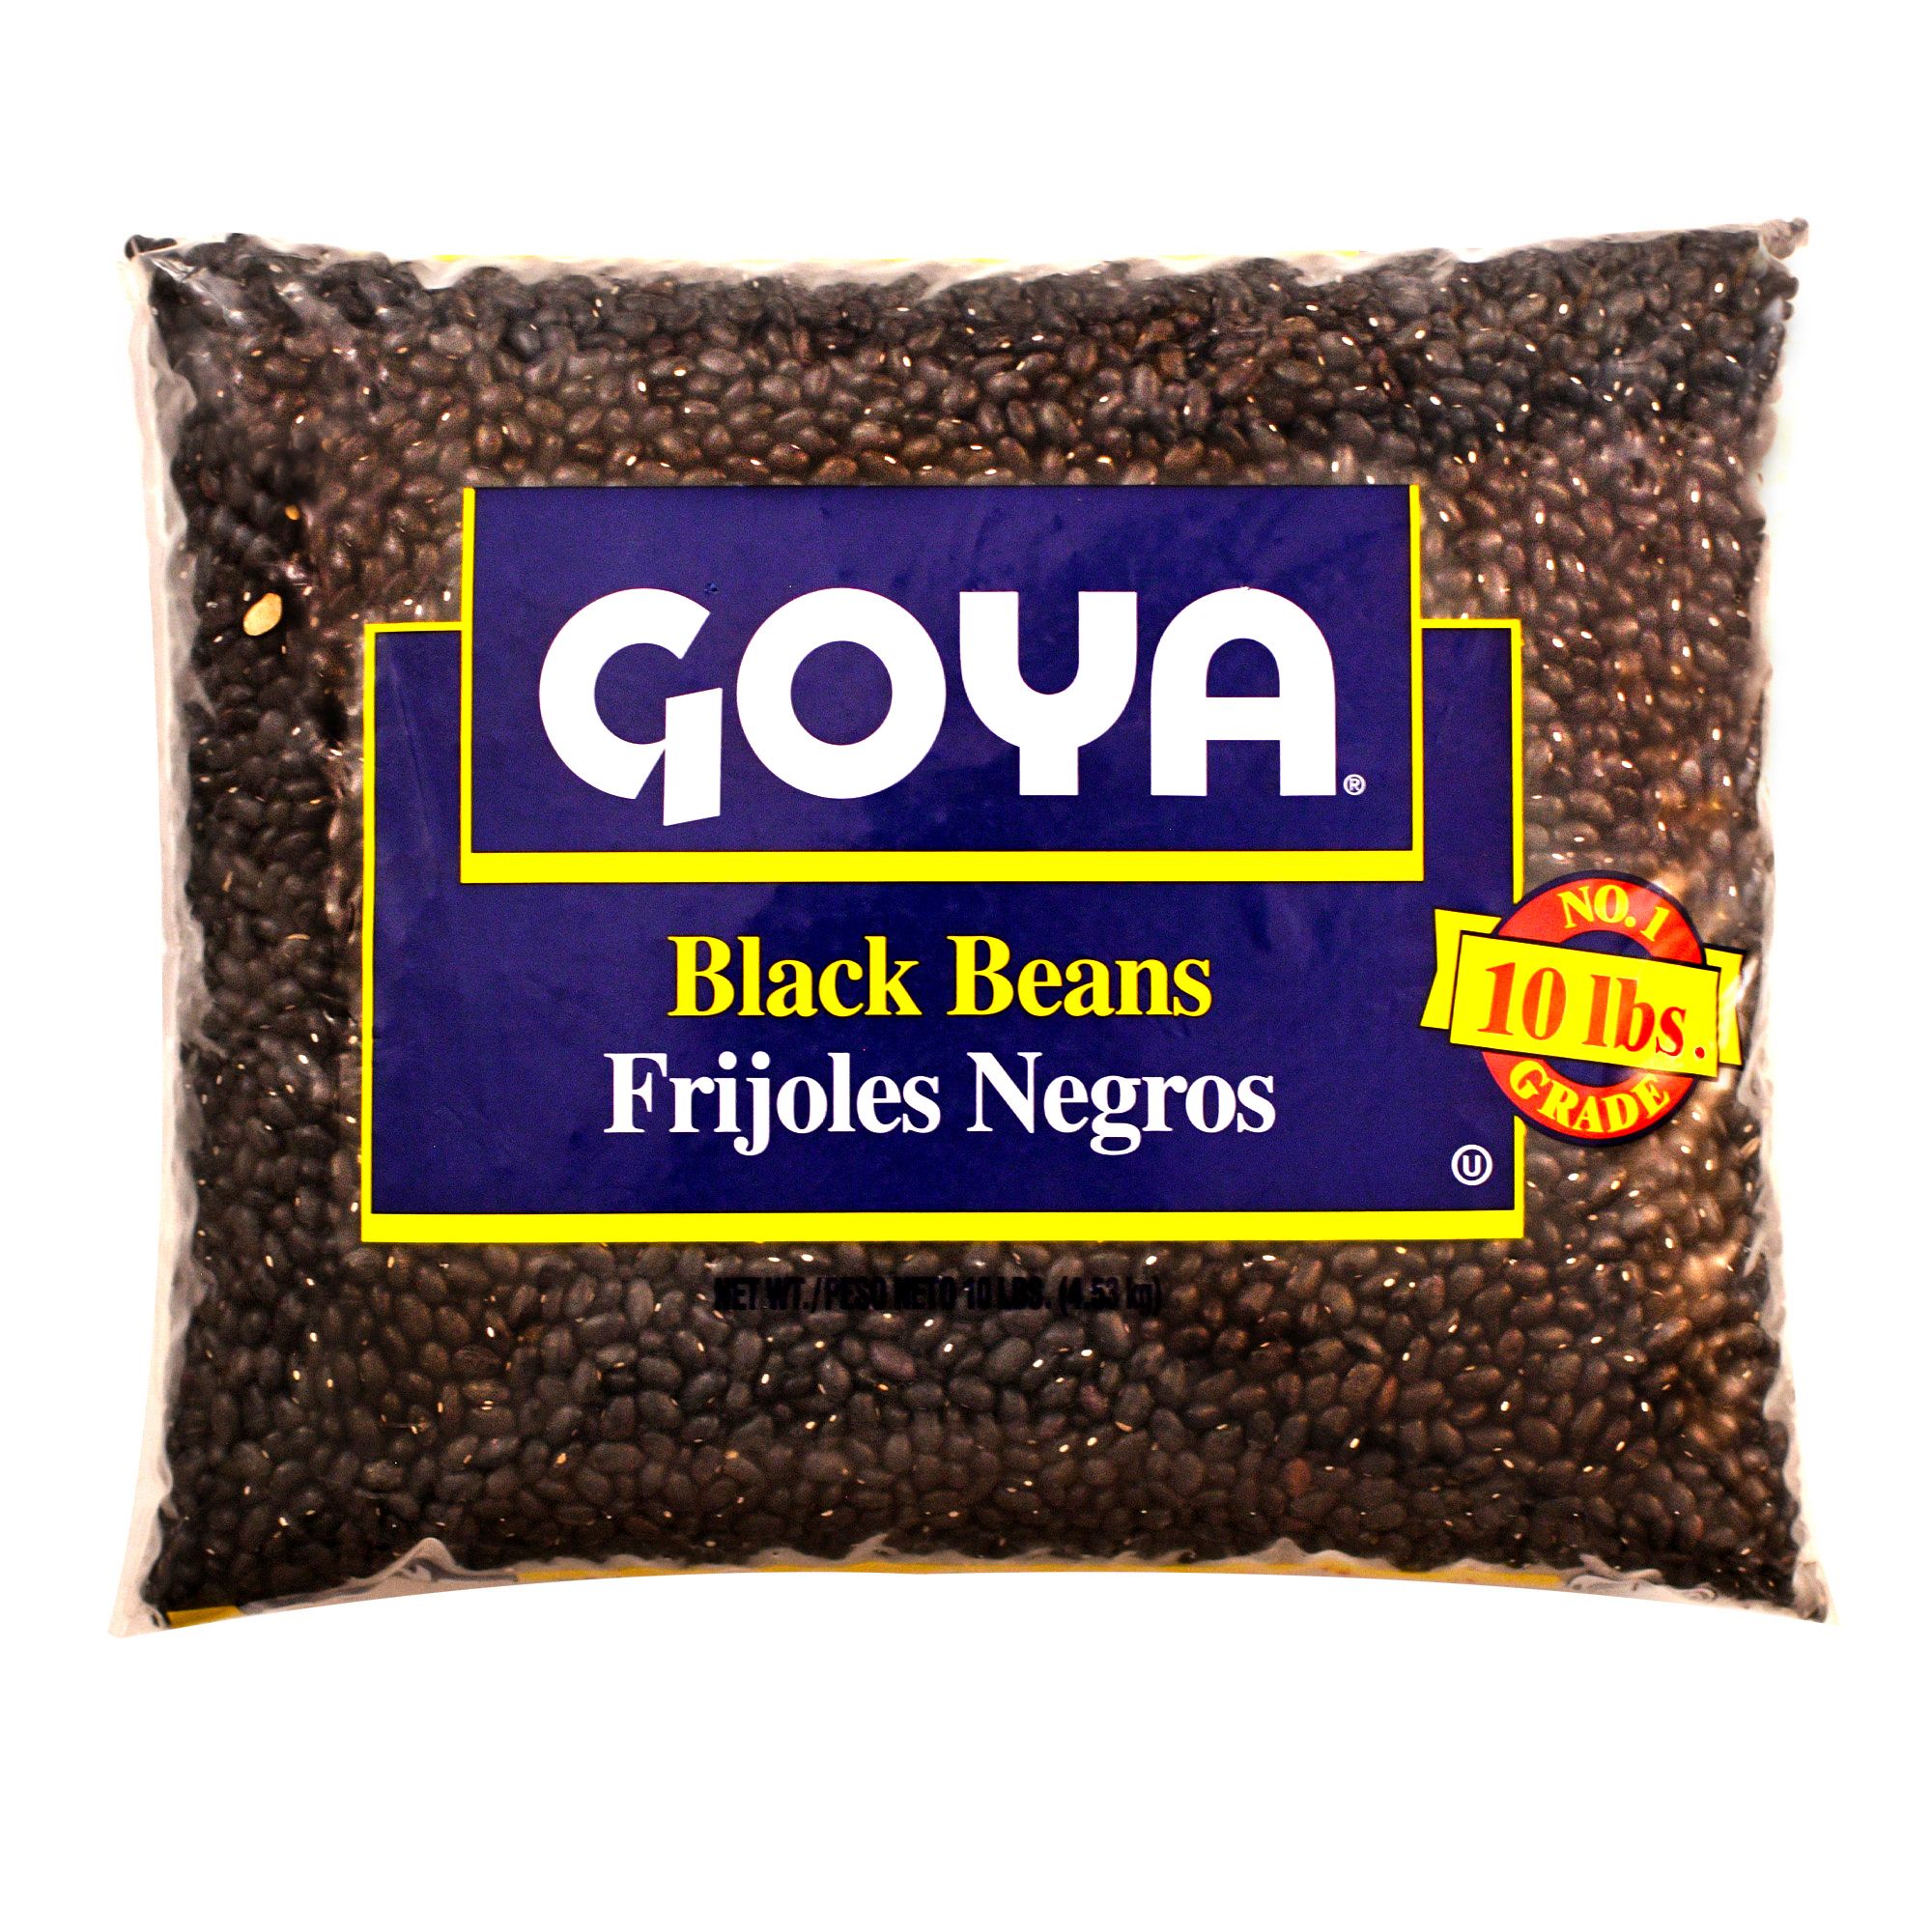 Goya Black Beans, 10 lb., Bag